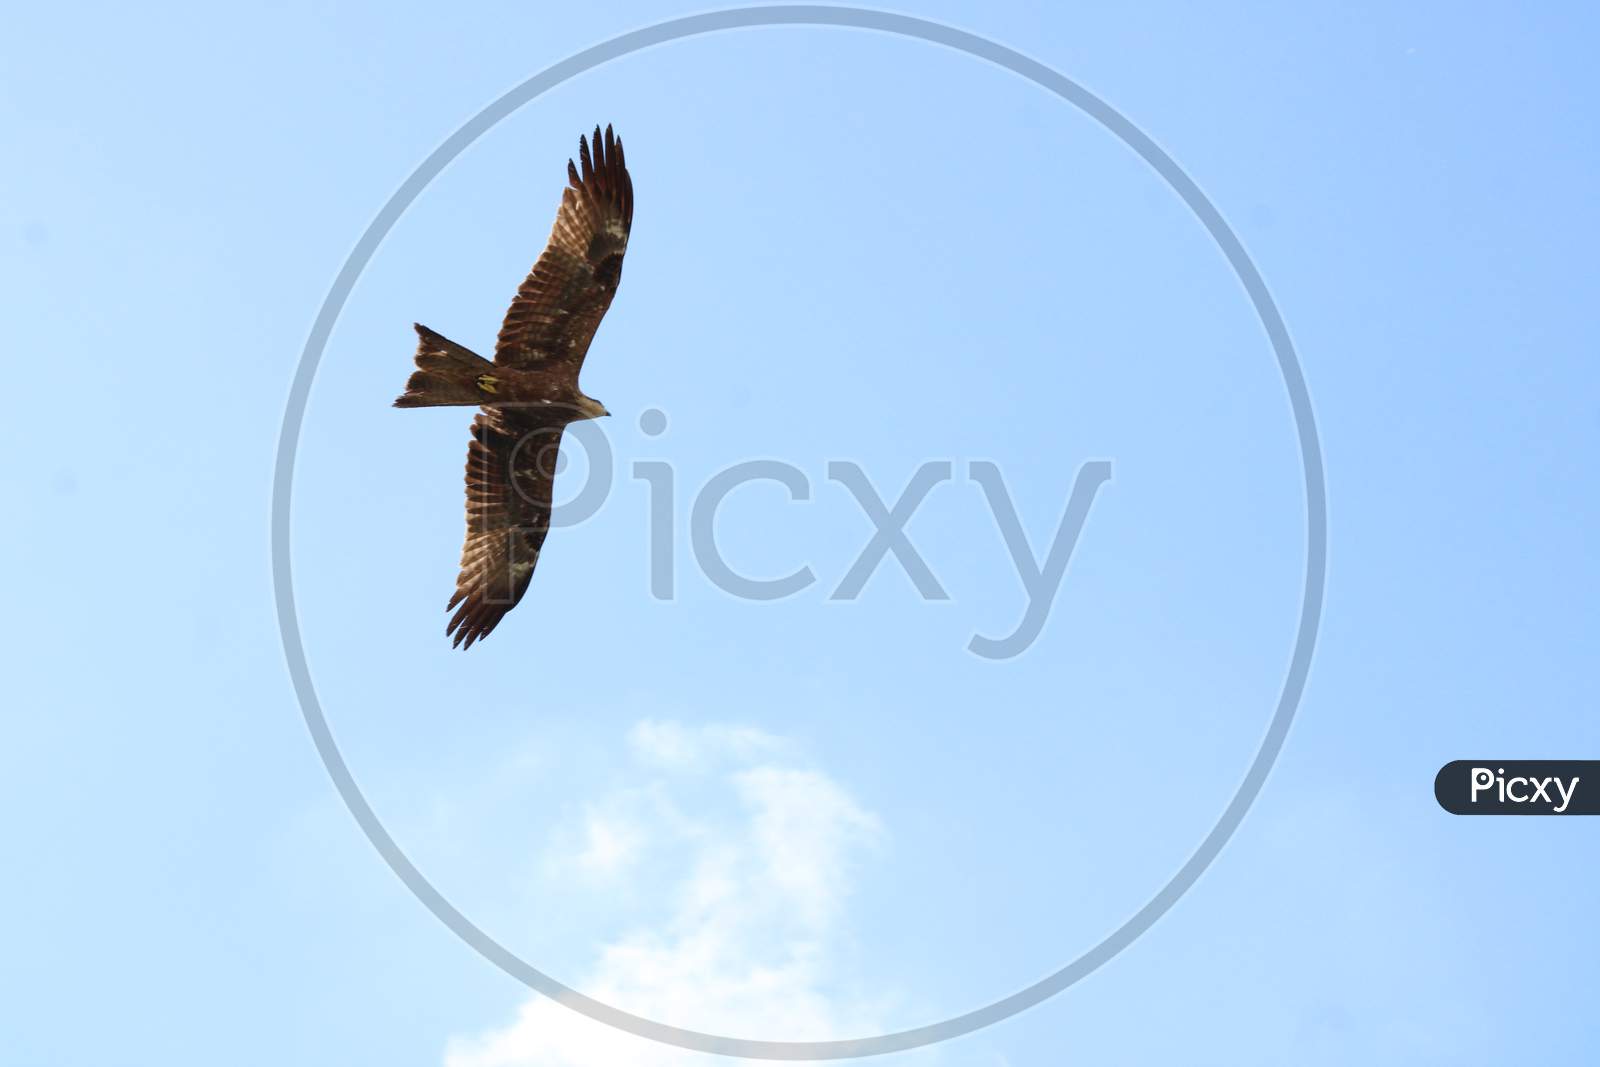 Eagle bir flying high in sky. Good background for teams message. Seasonal greetings.